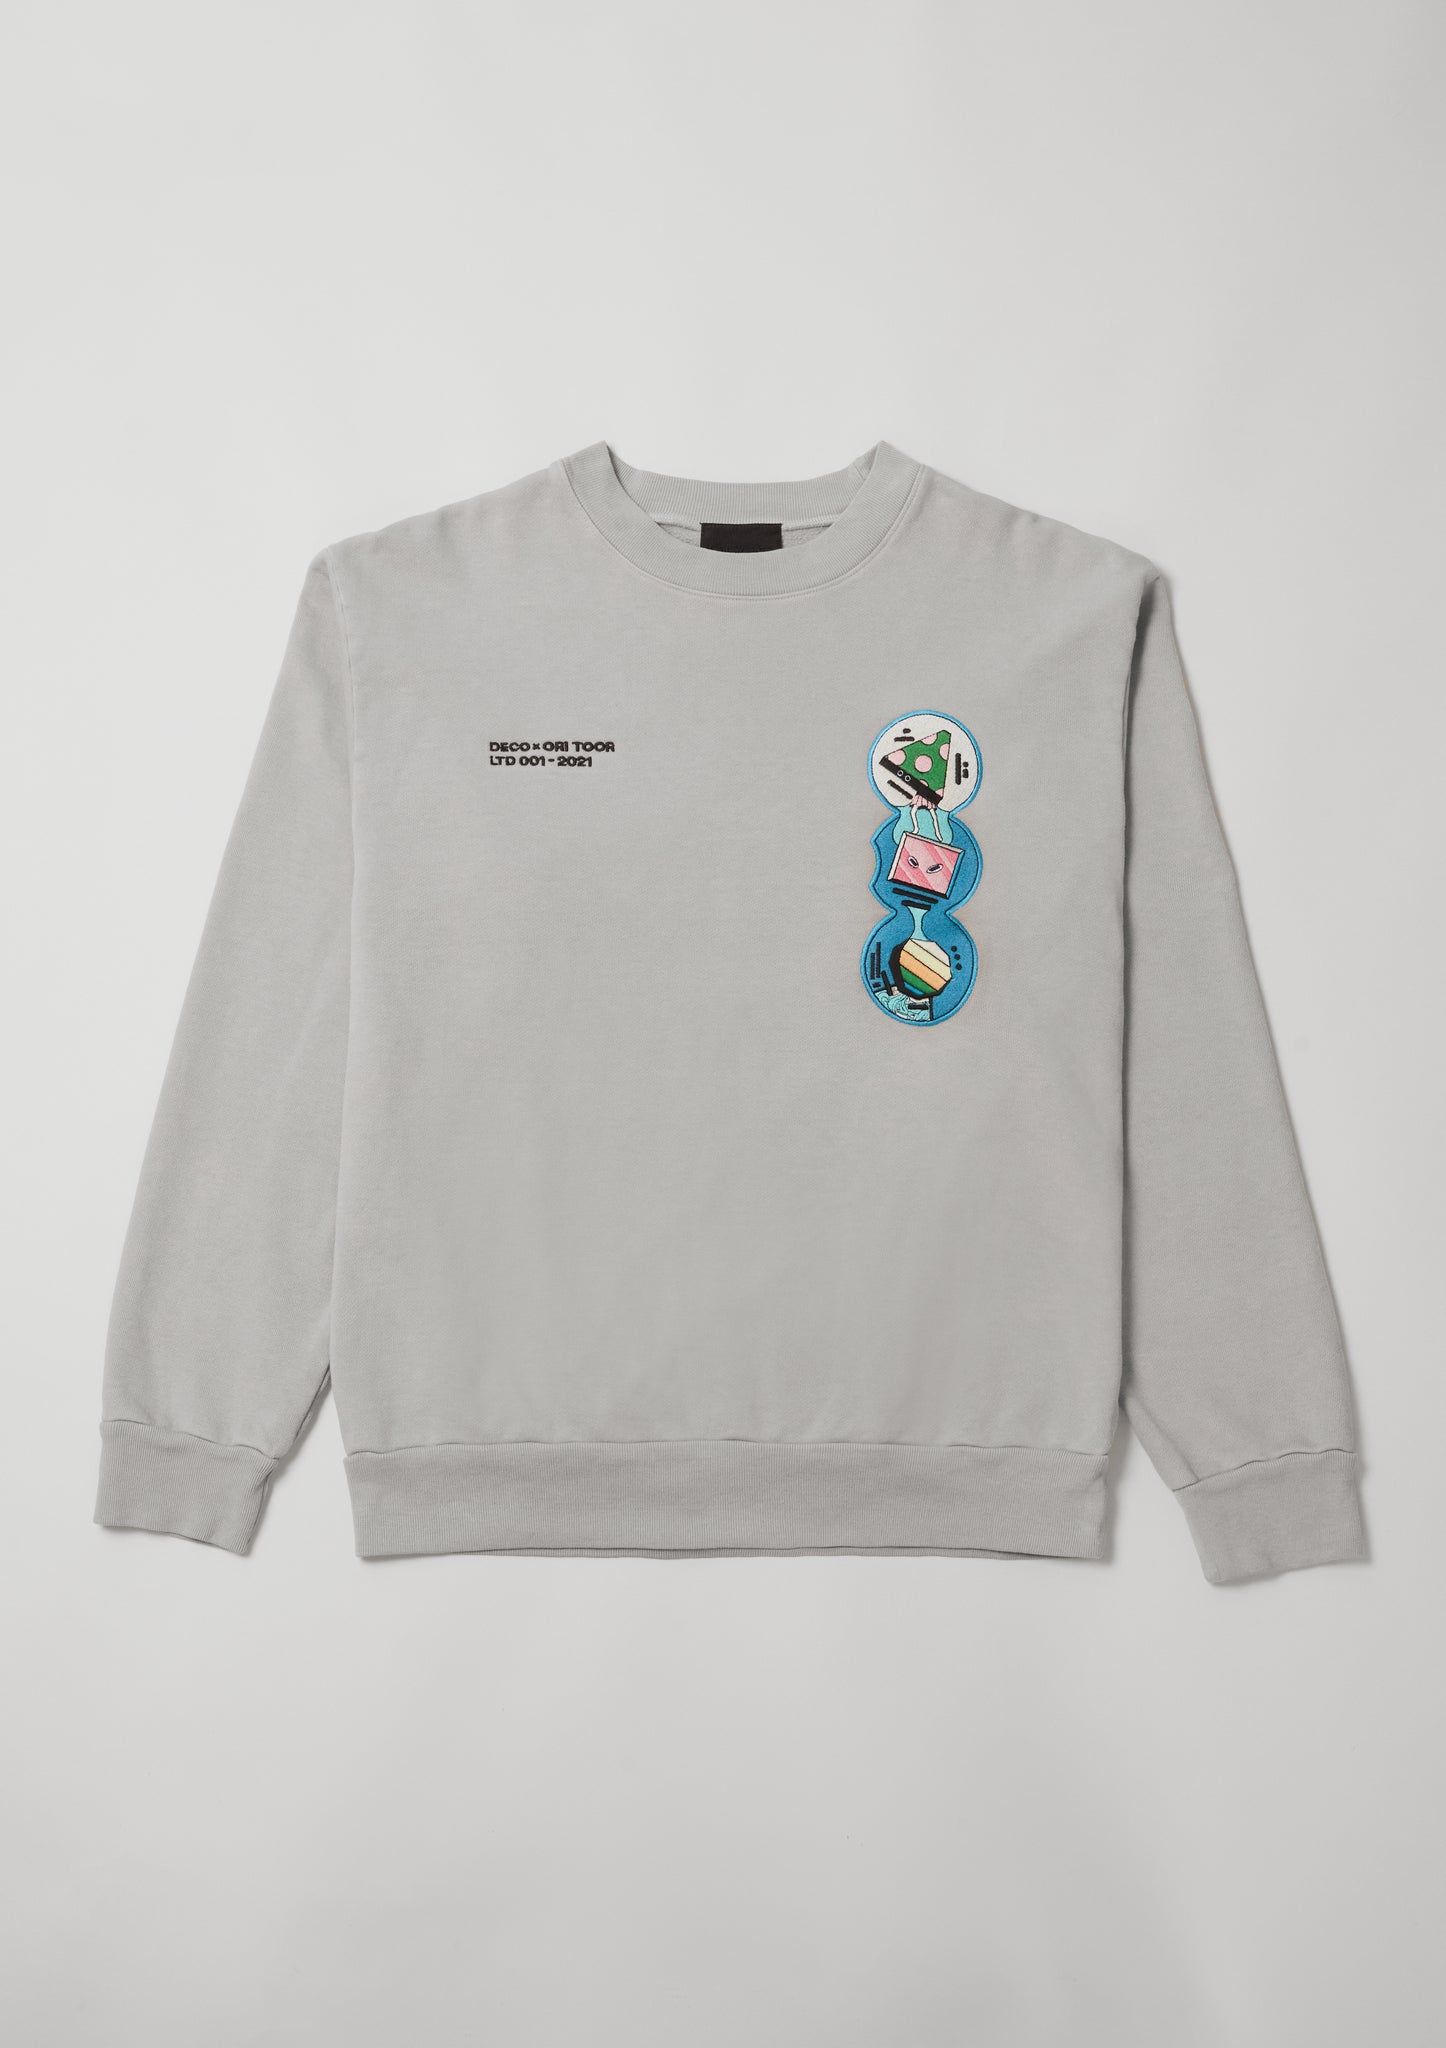 Ori Toor - Limited Edition Sweatshirt - Grey